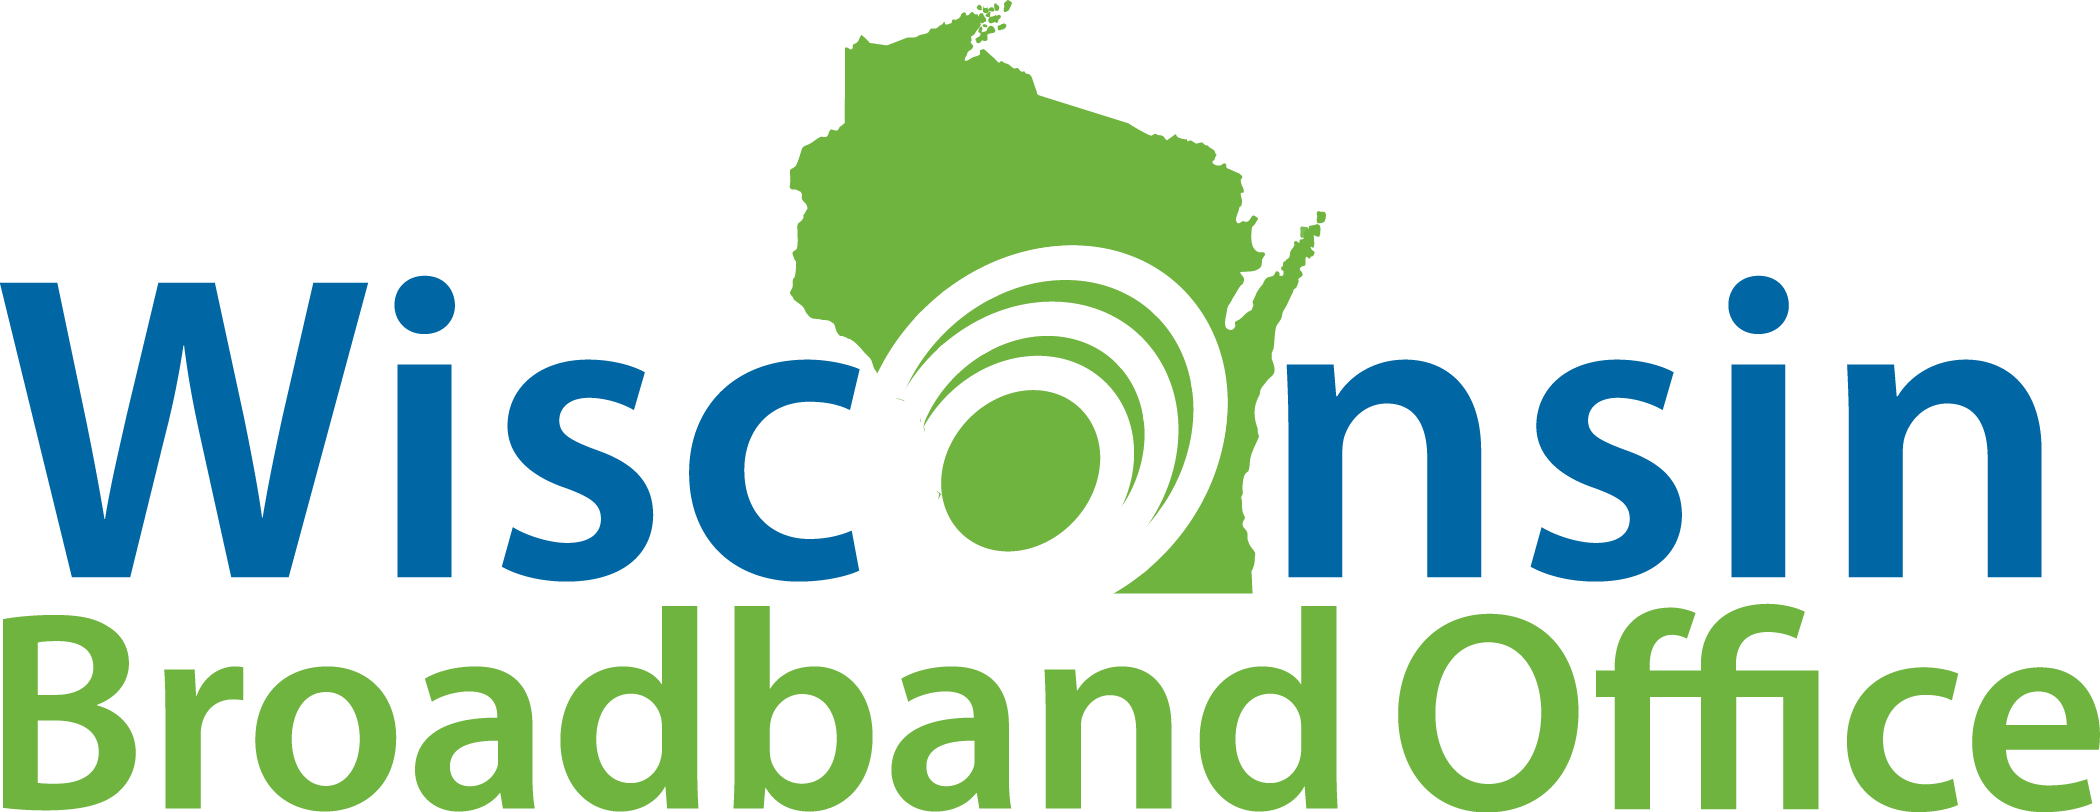 image of the Wisconsin Broadband Logo